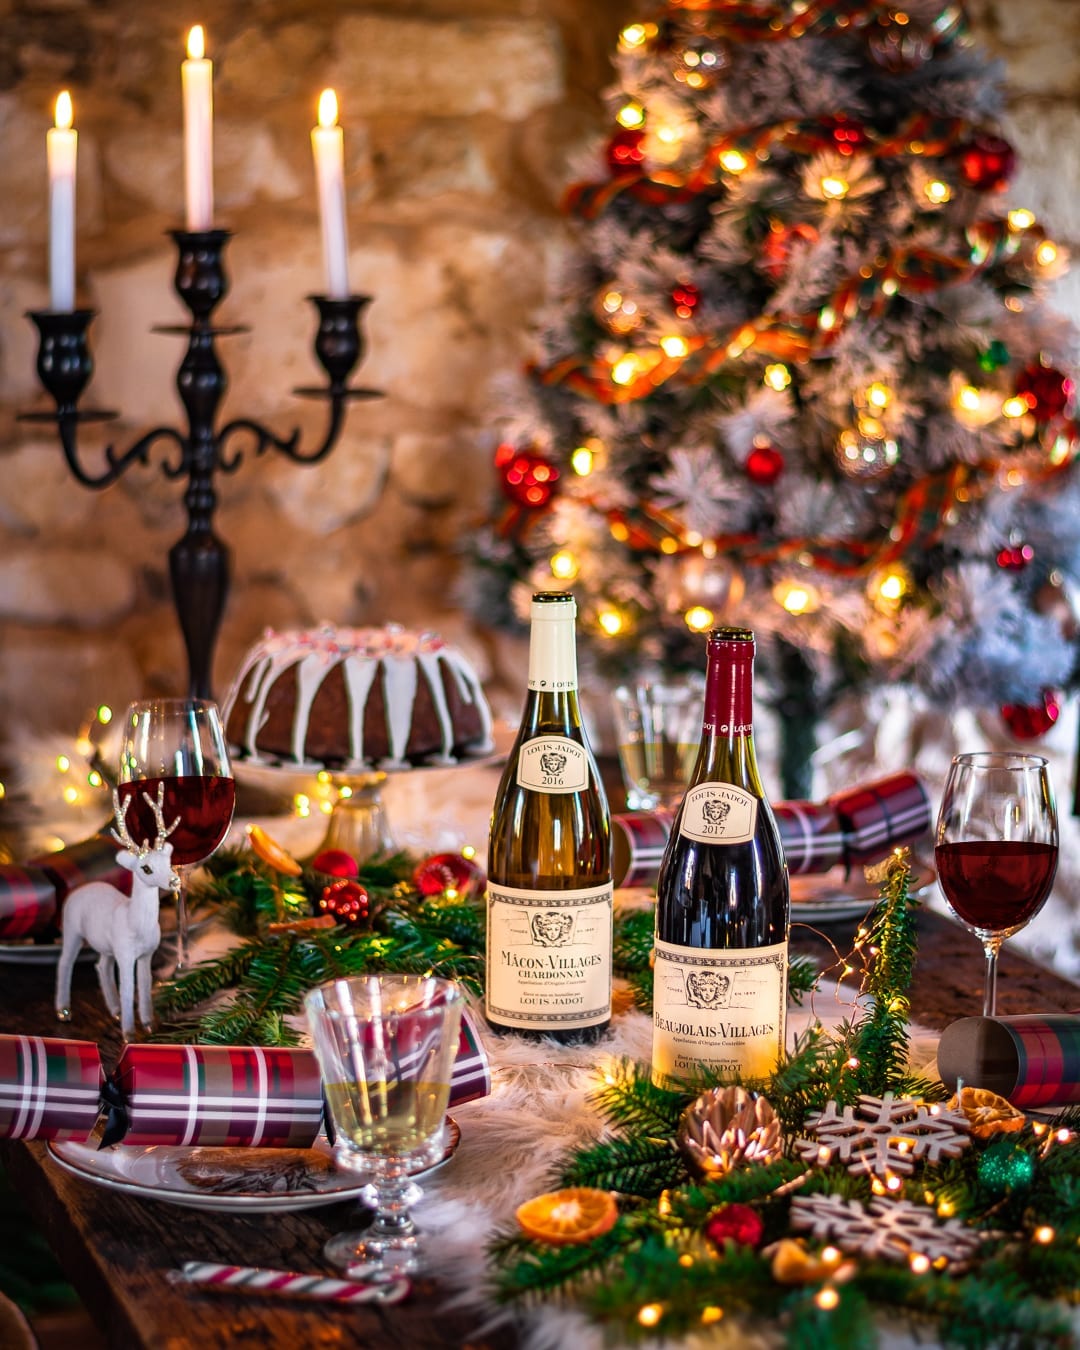 Louis Jadot red wine, white wine, Christmas setting, holiday